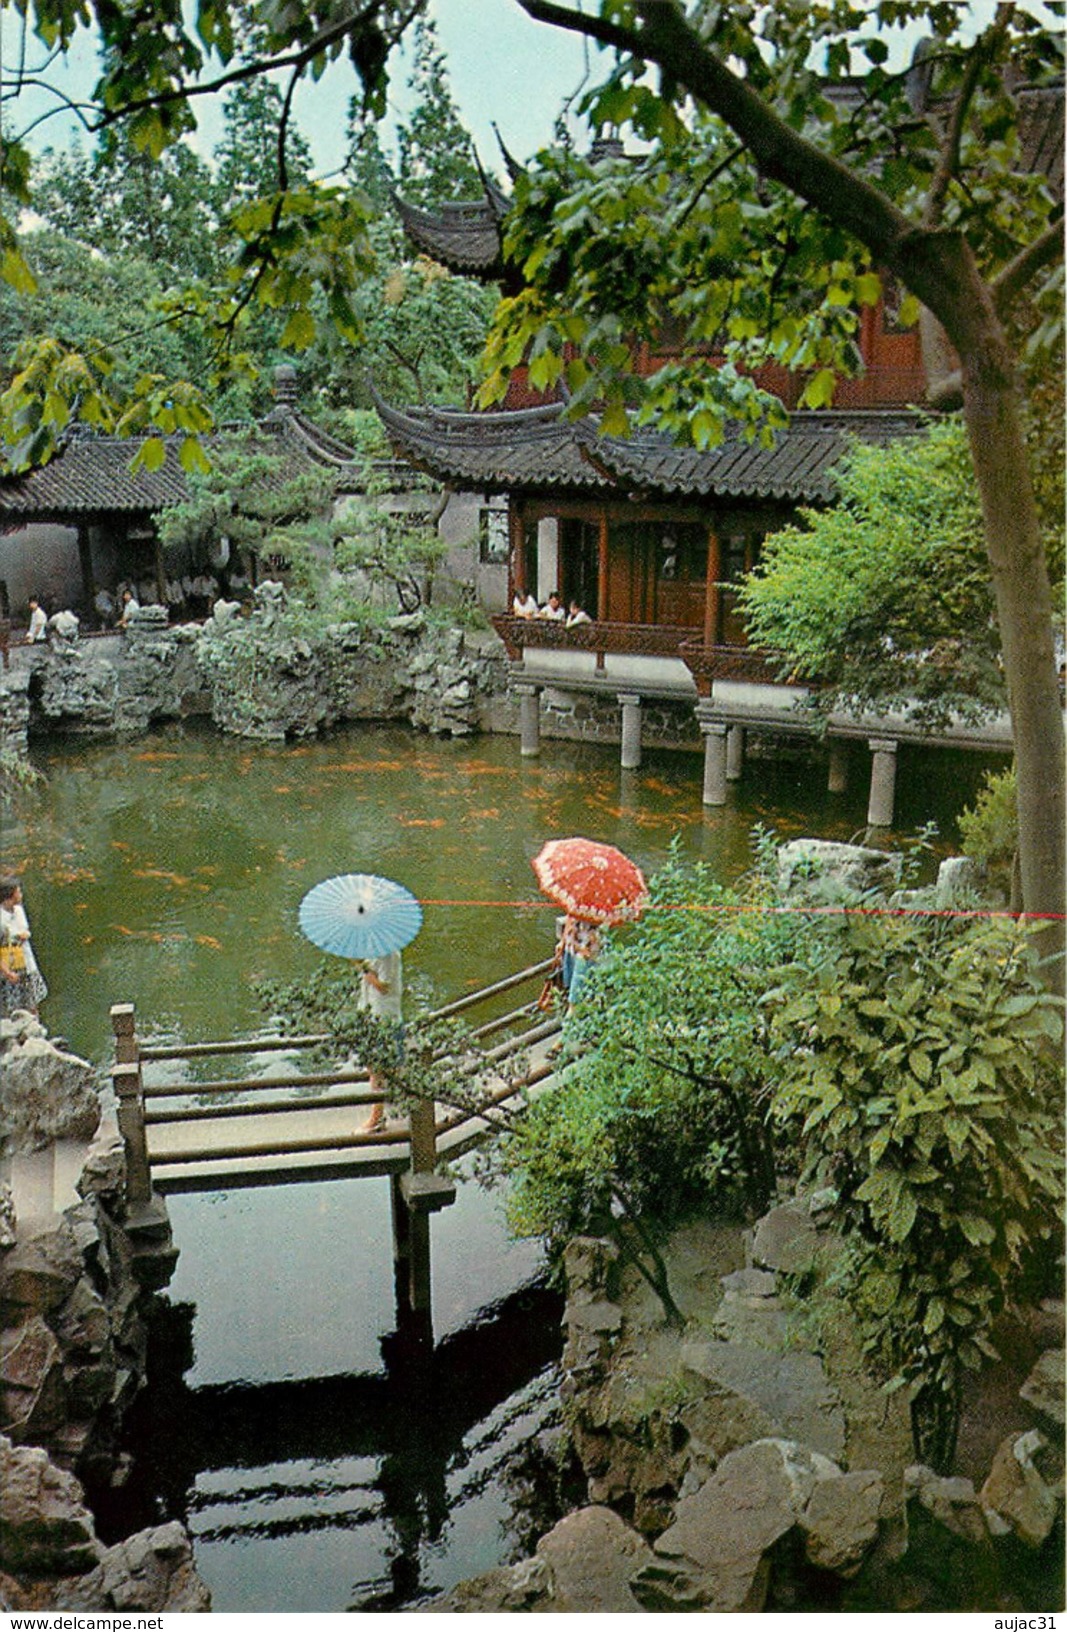 Chine - China - Shanghai - Yu garden - Jardin Yuyuan - 12 cartes avec pochette - Semi moderne grand format - bon état